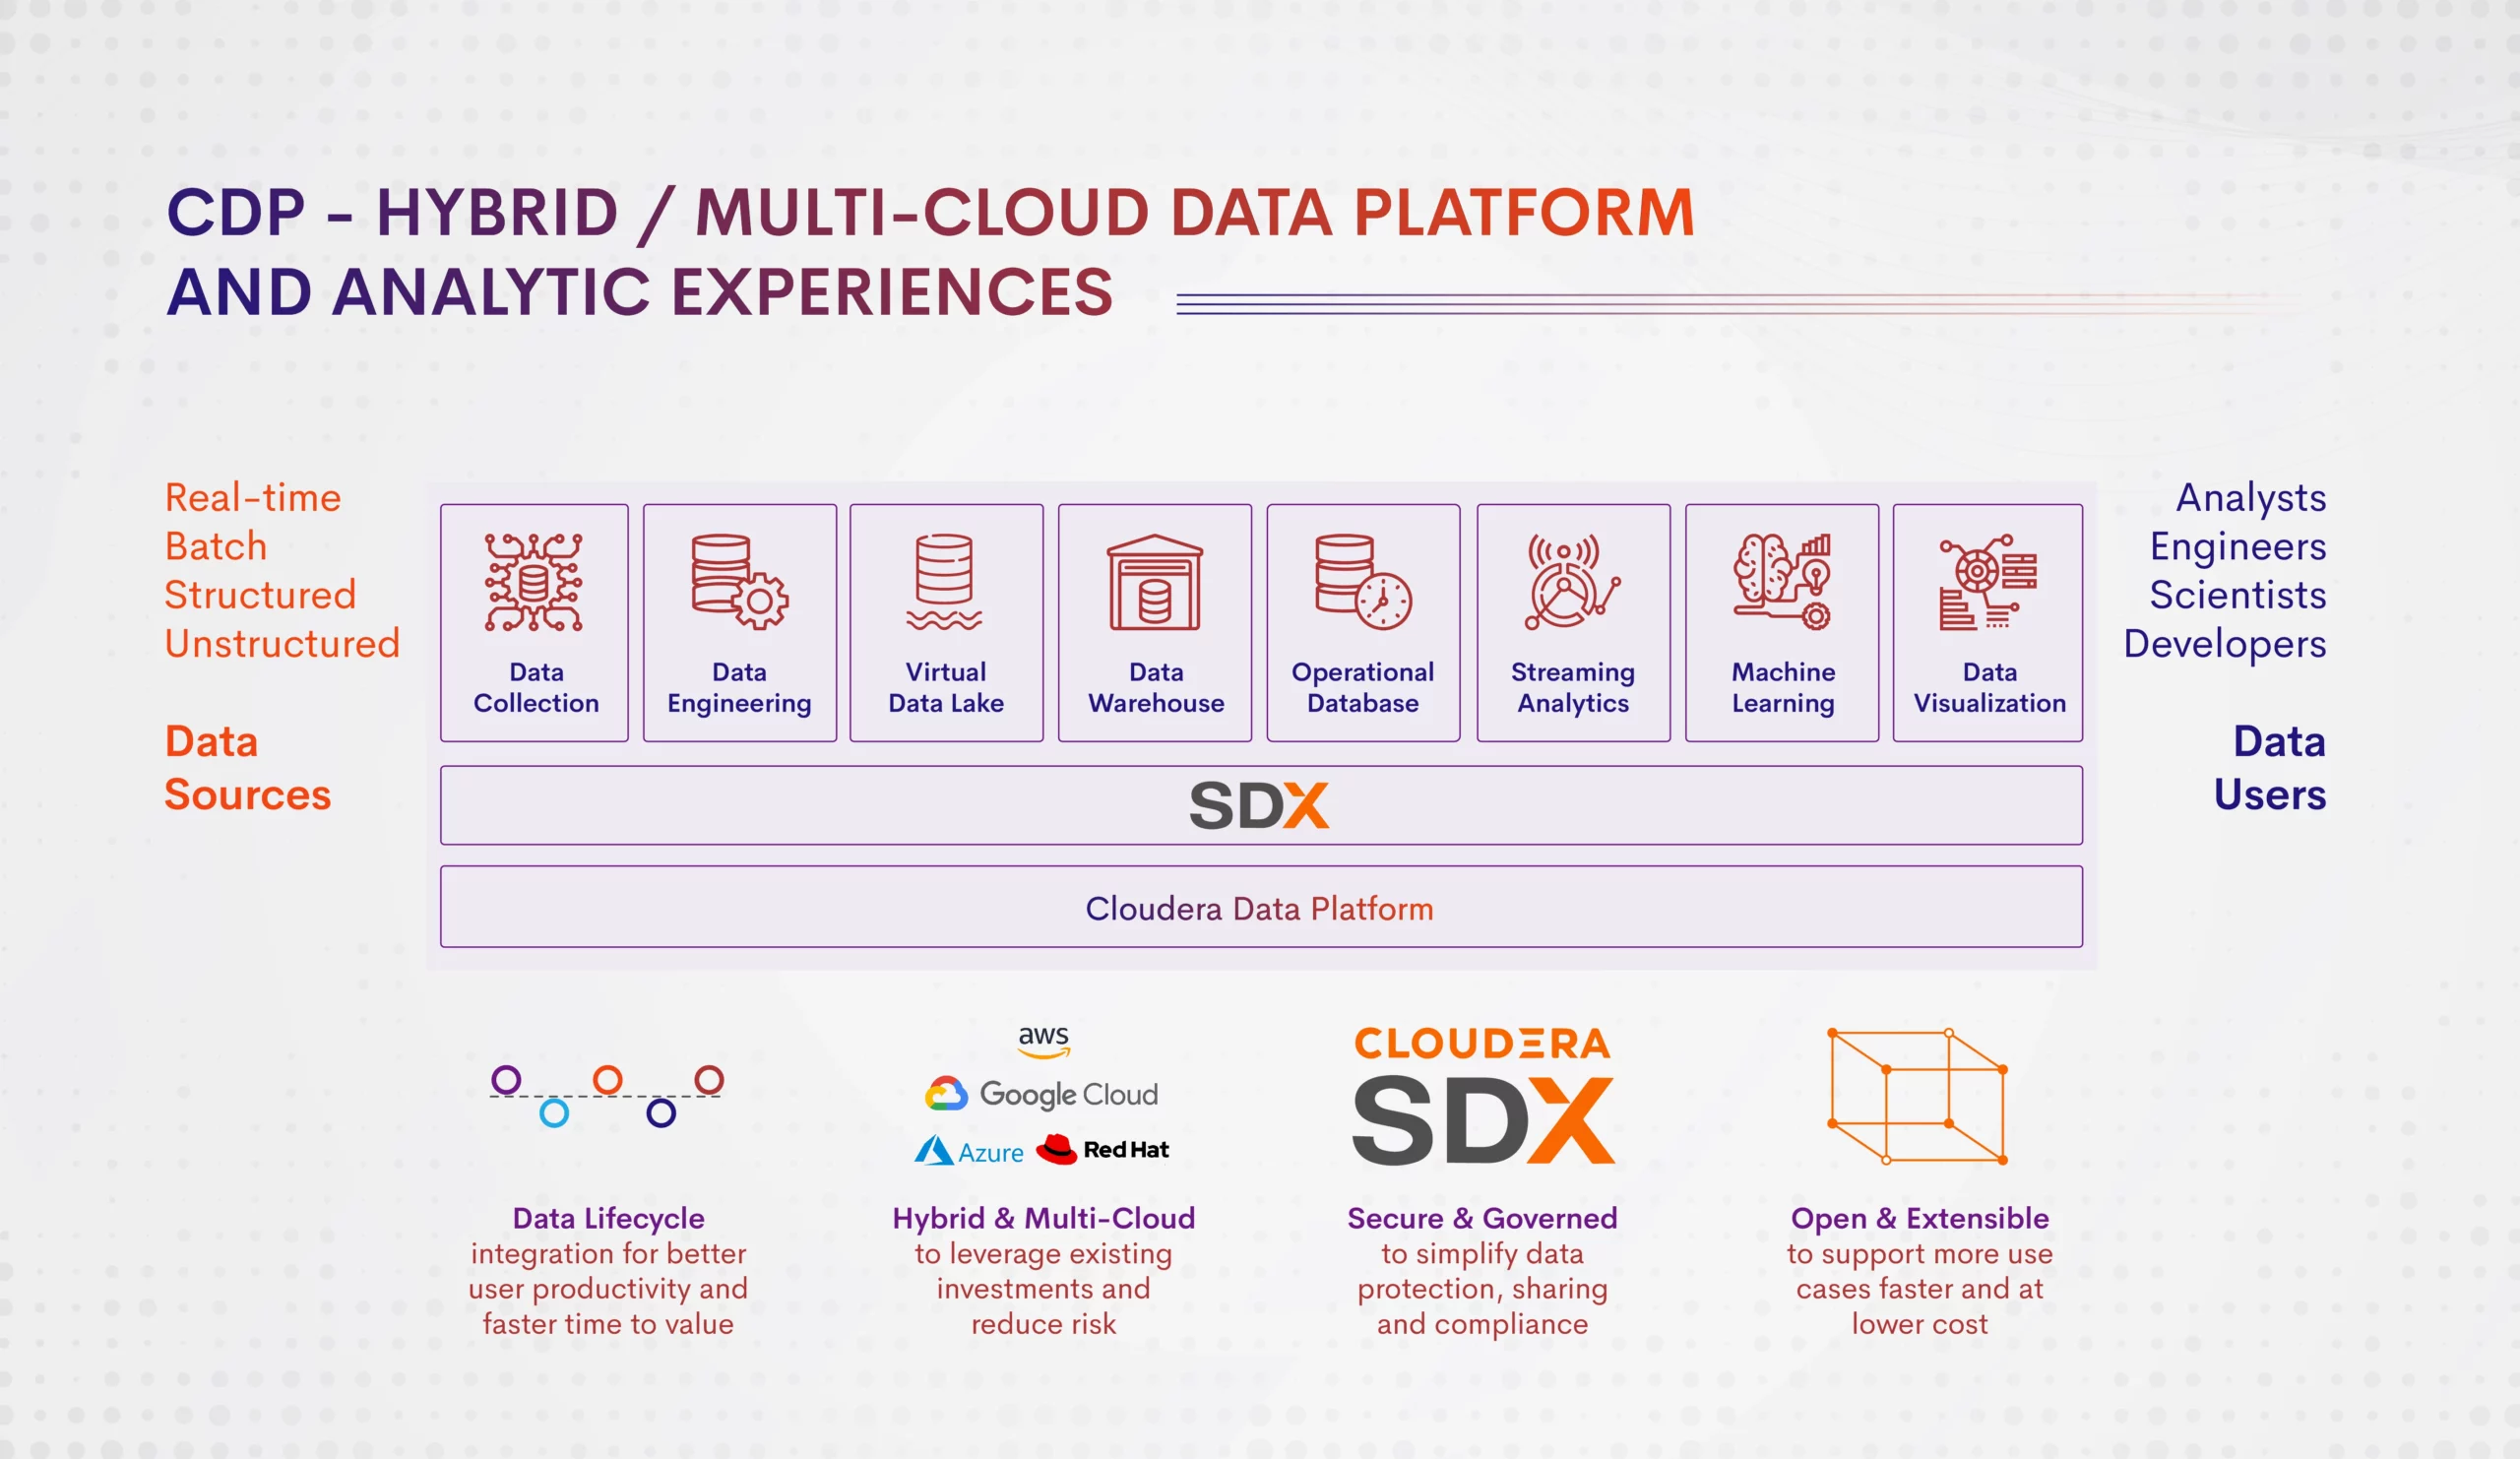 Cloudera Data Platform Solutions for Modern Enterprise